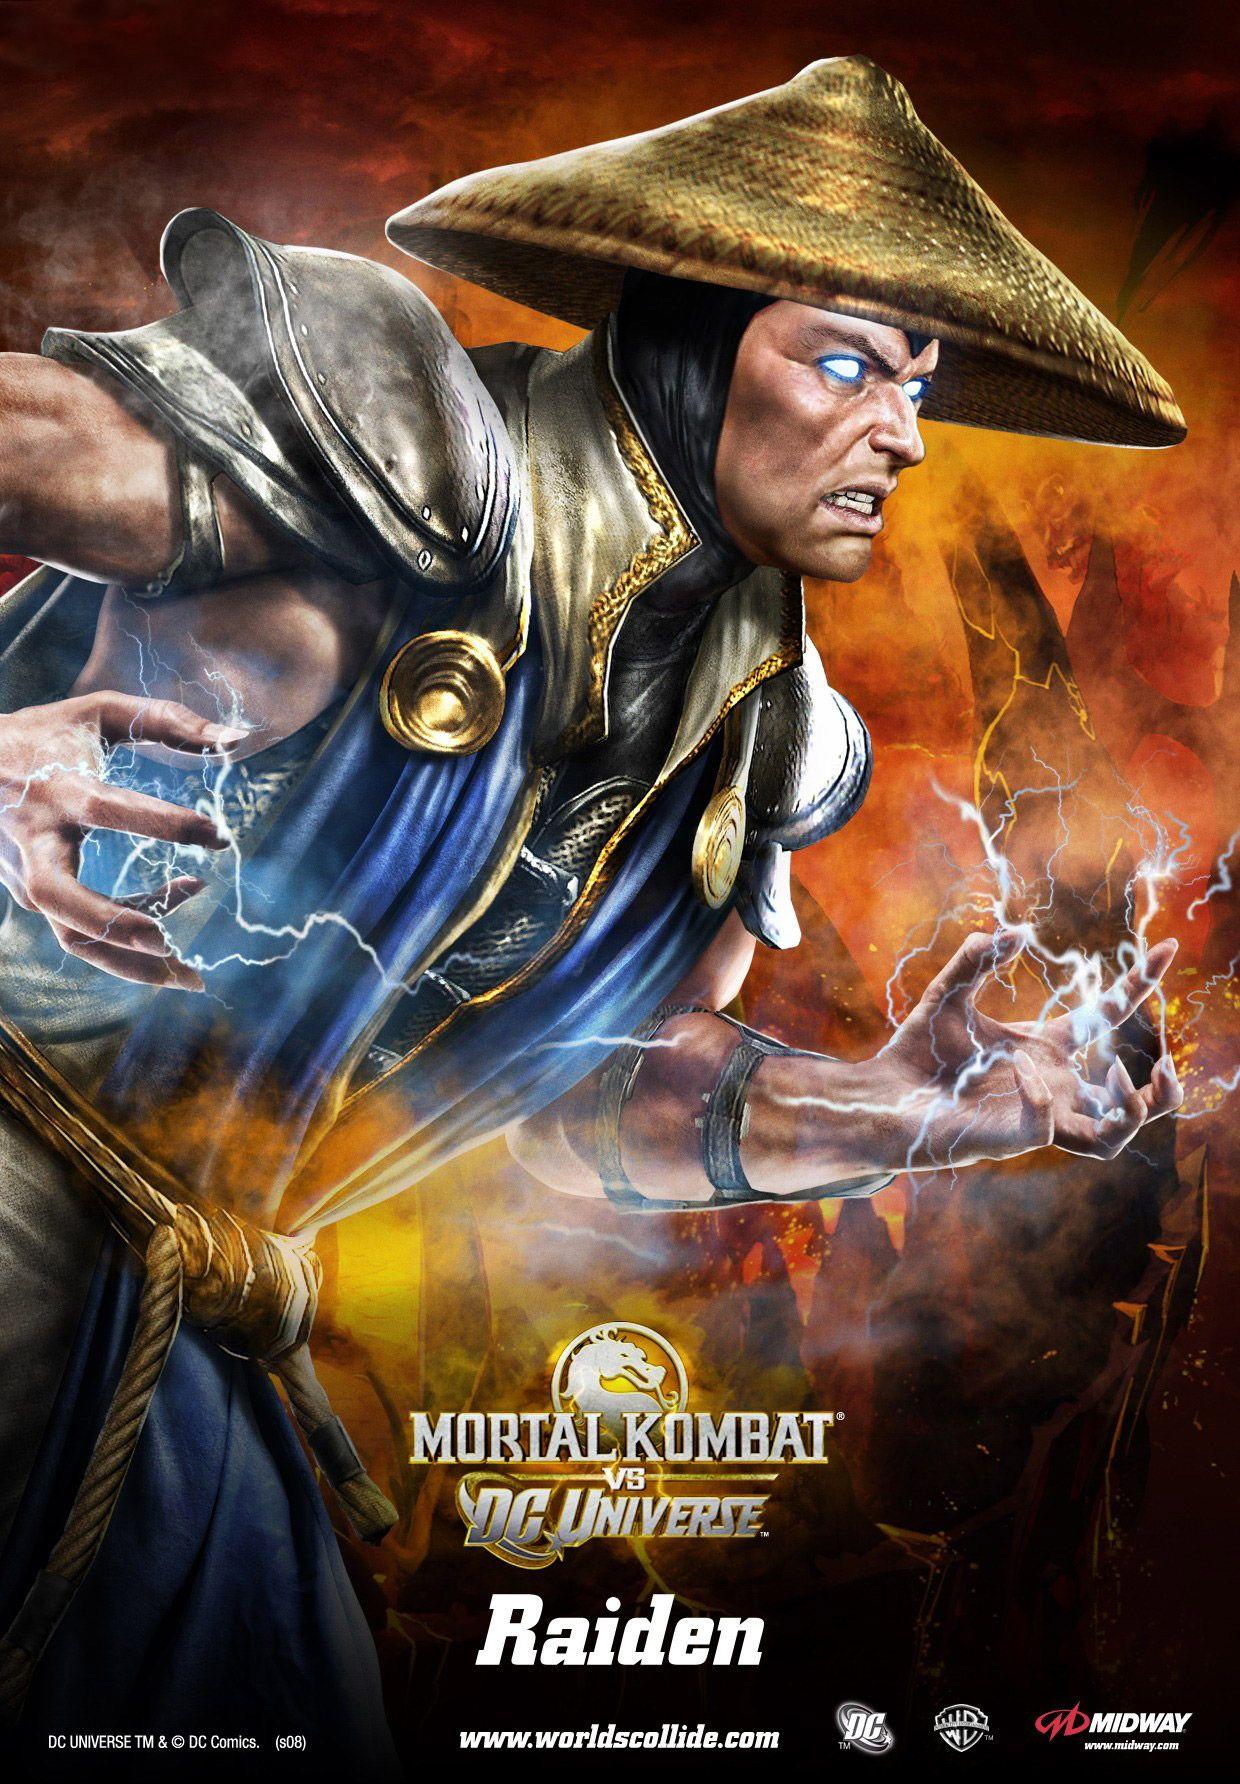 Mortal Kombat vs. DC Universe screenshots, image and picture